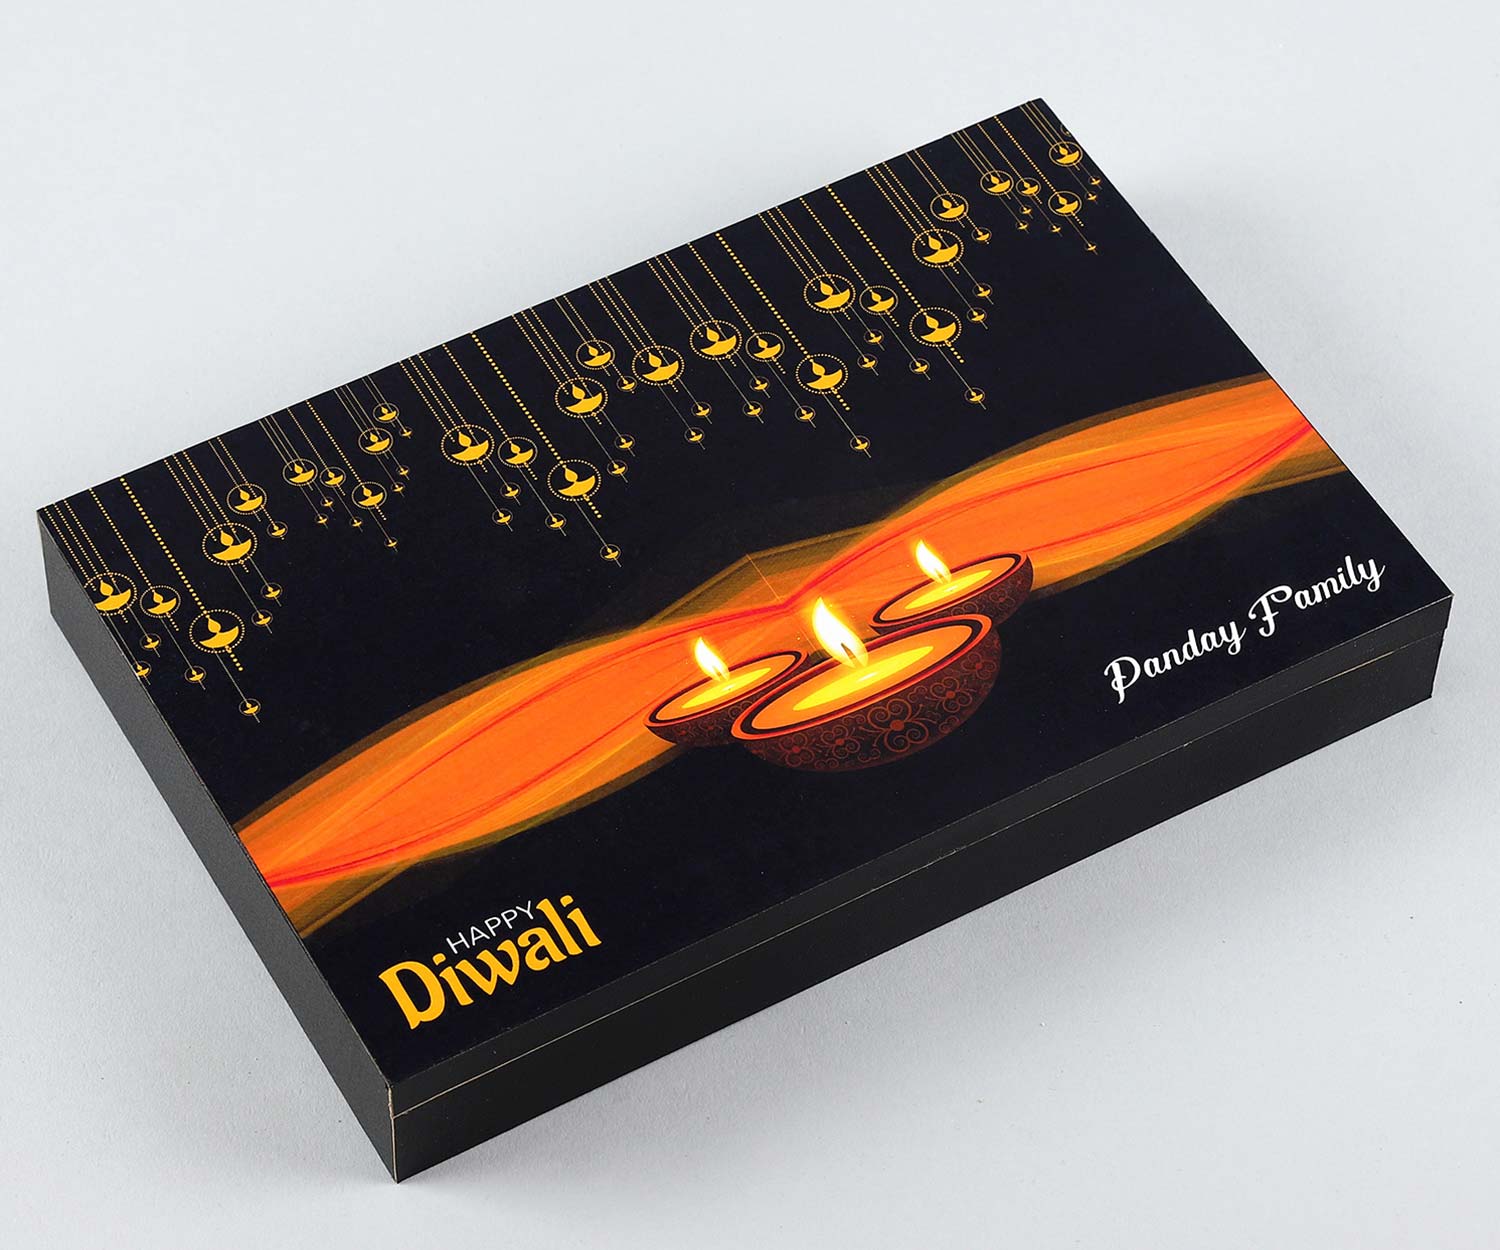 Personalised colourful chocolates box diwali gift